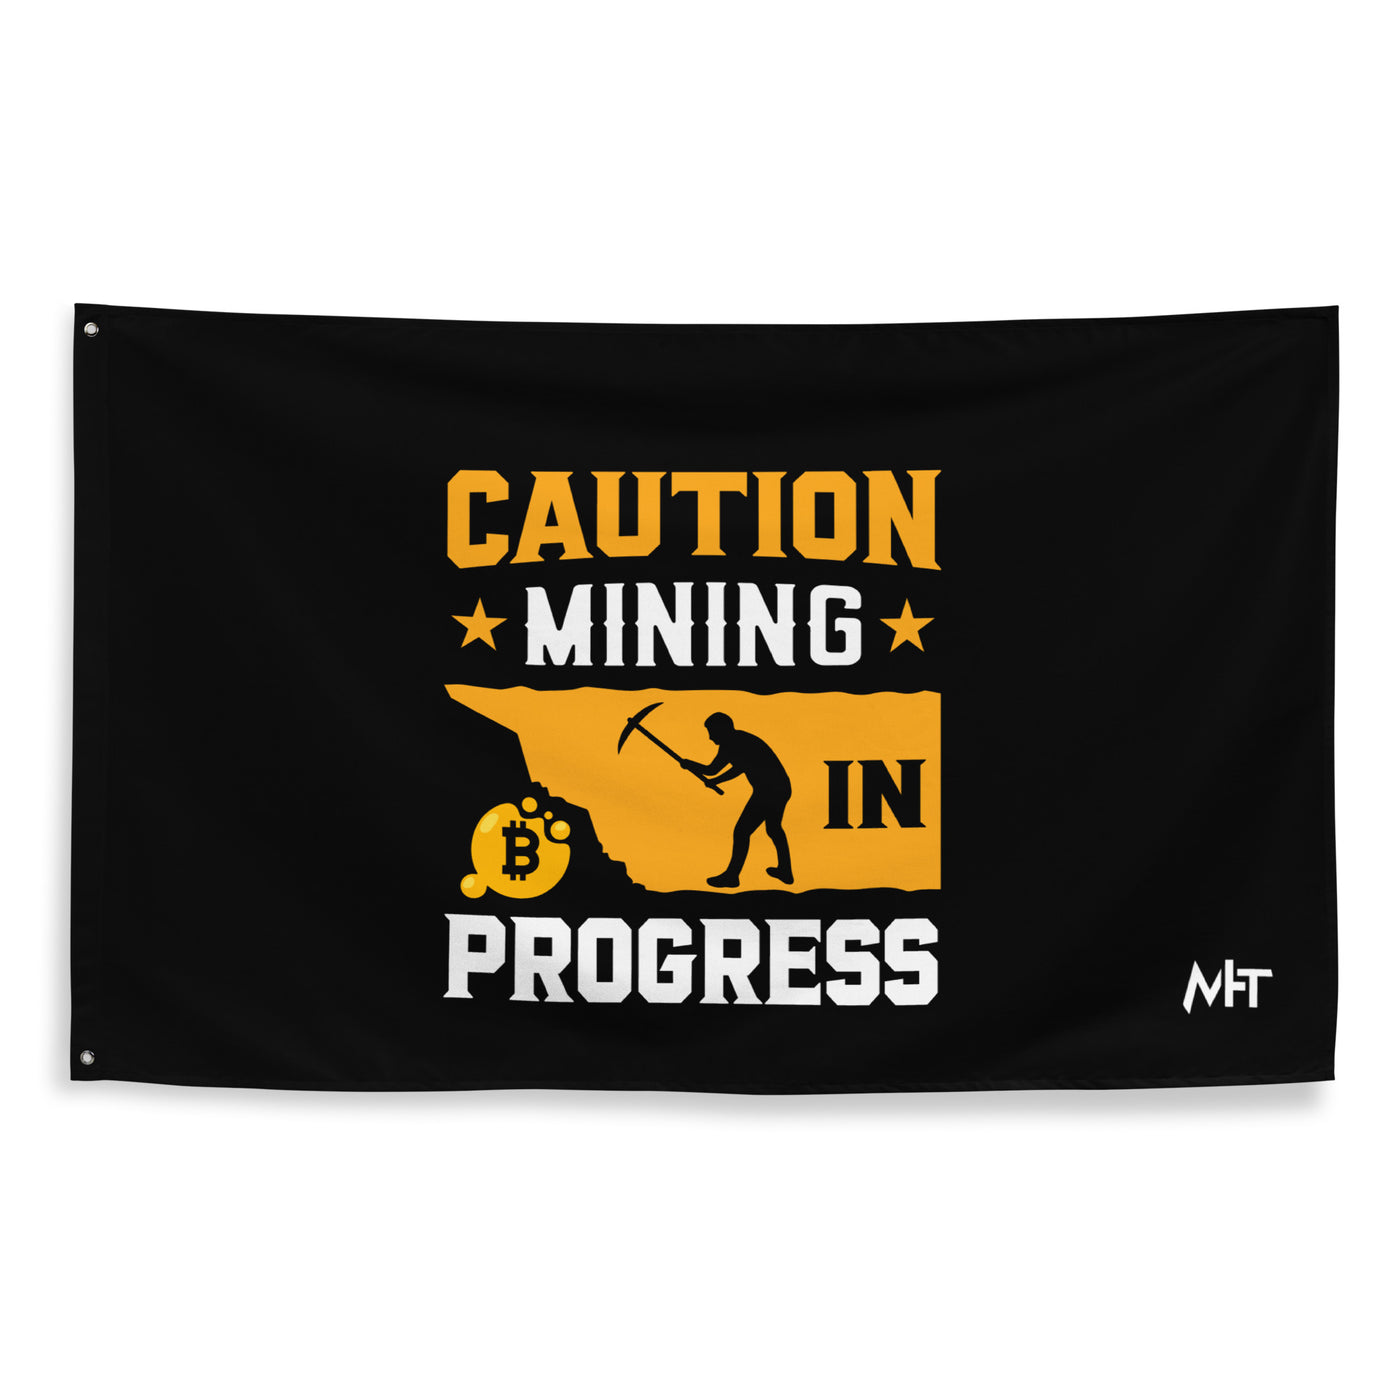 Caution! Mining is in Progress - Flag